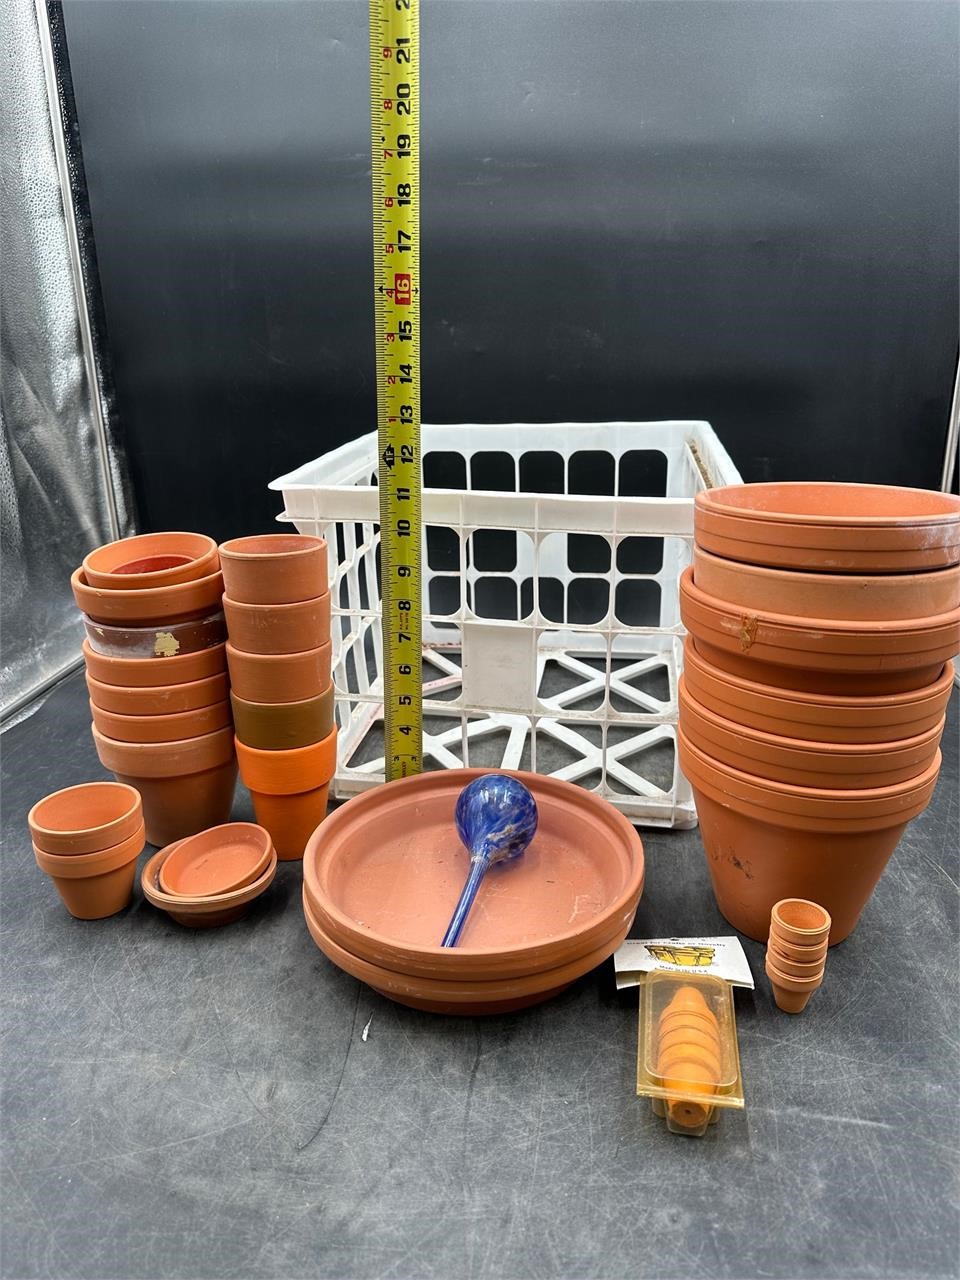 Clay Pots & More